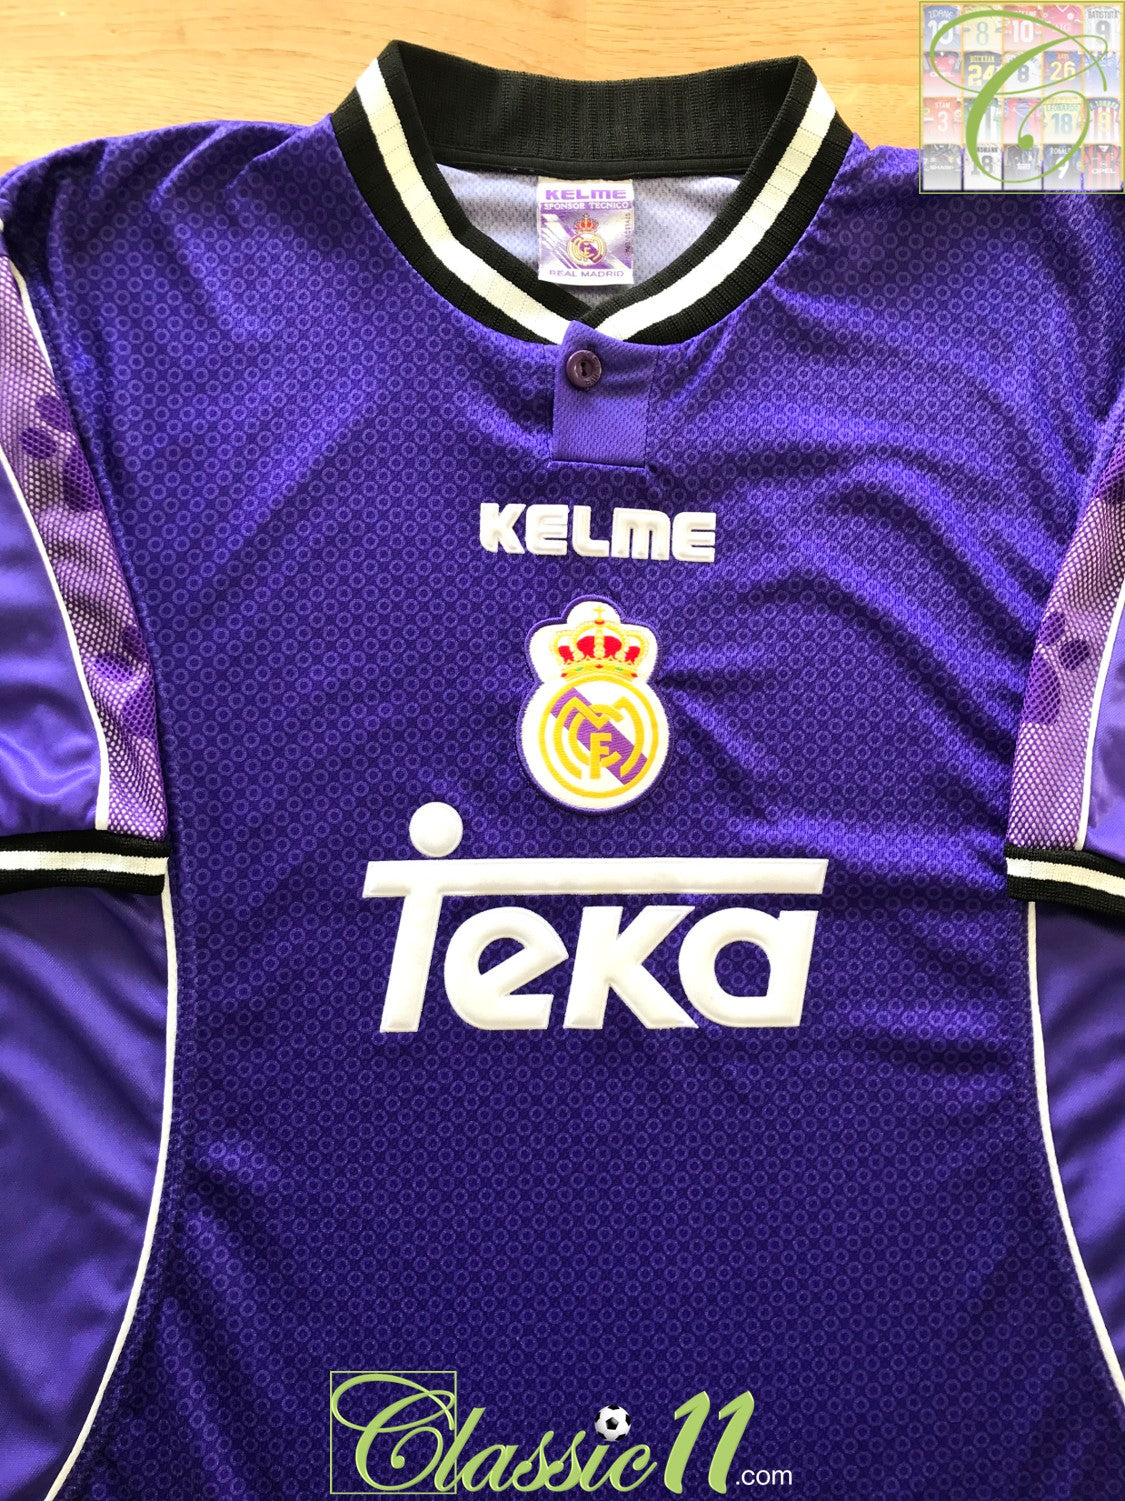 1997/98 Real Madrid Away La Liga Football Shirt / Kelme Soccer 